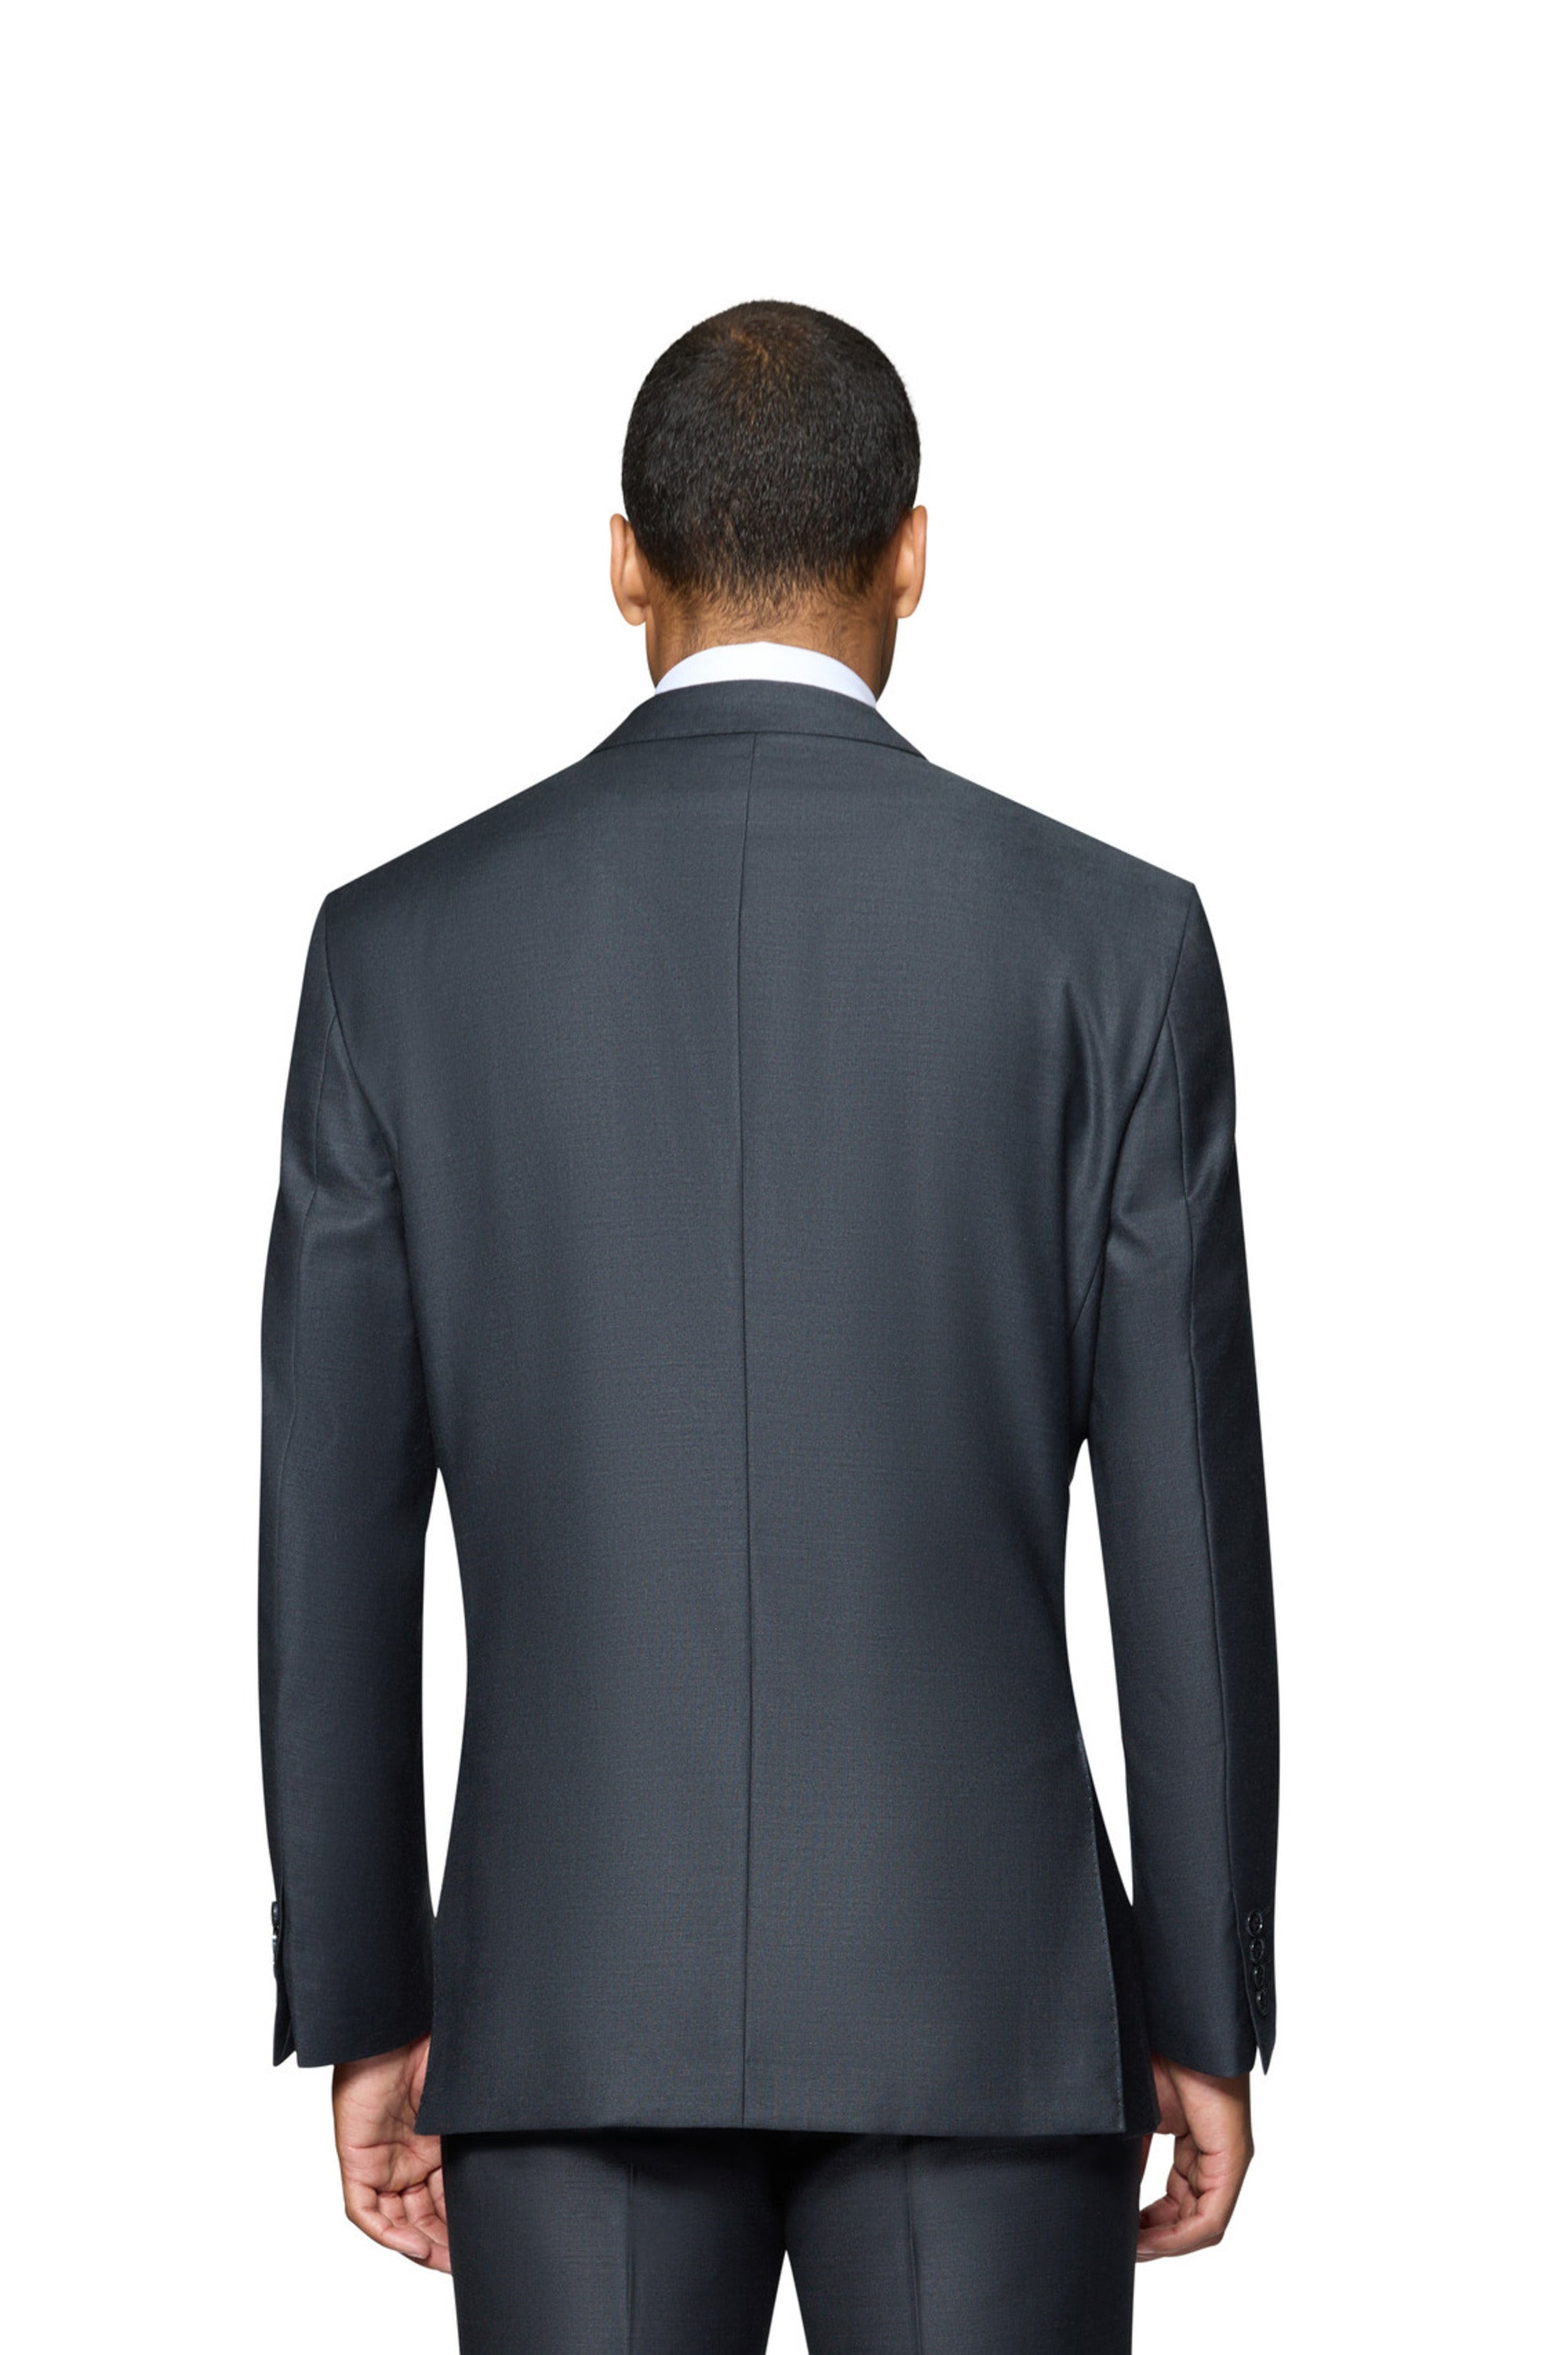 Berragamo Elegant - Faille Wool Solid Suit Modern - Charcoal